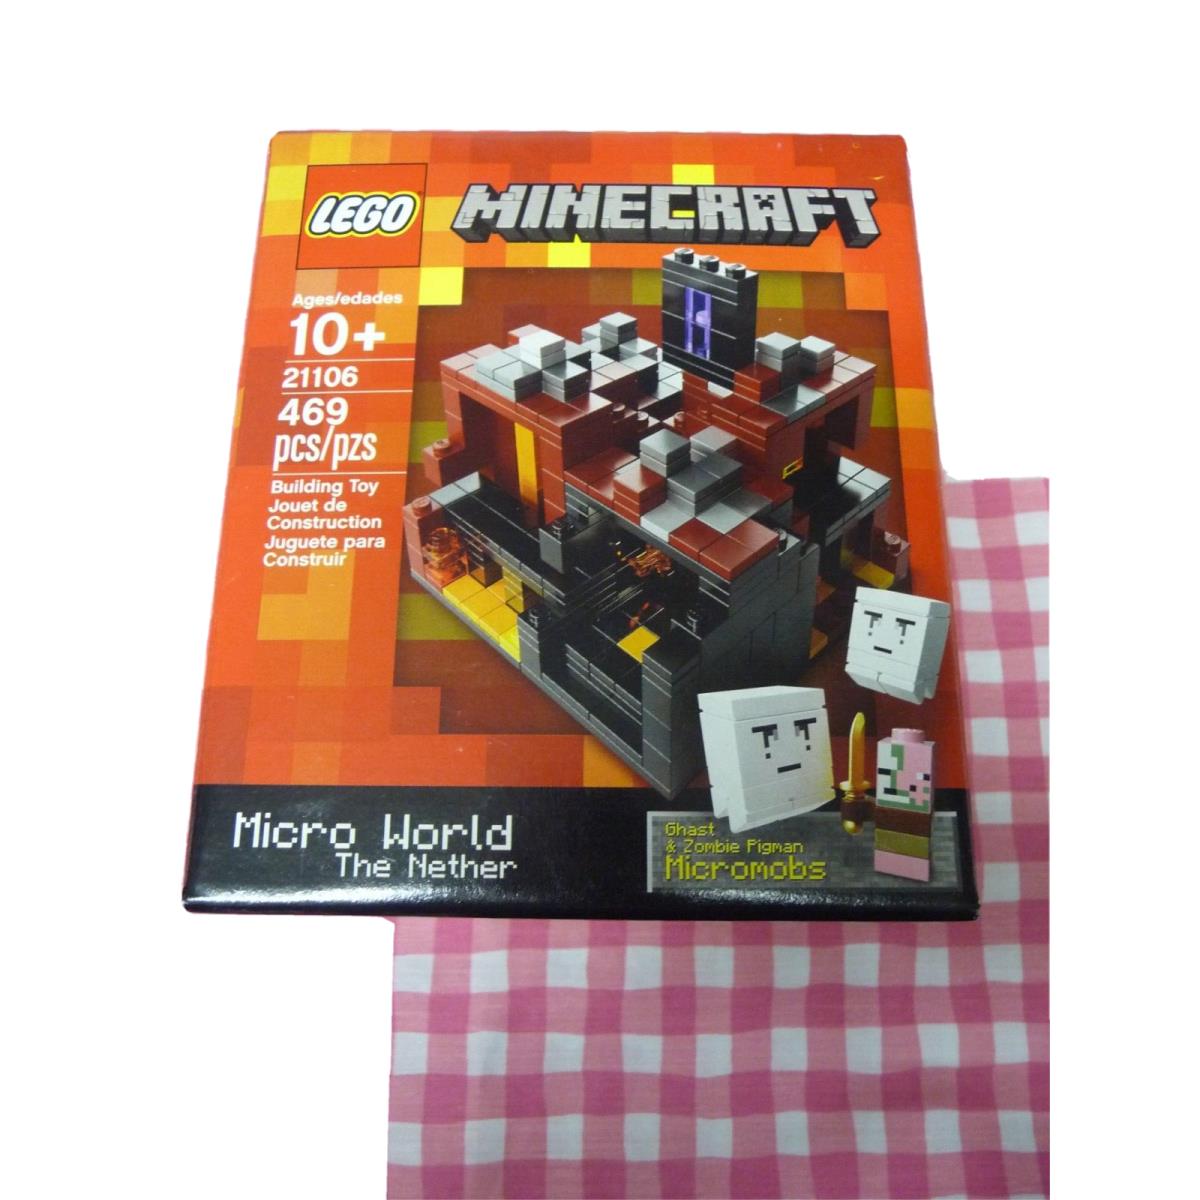 Lego Minecraft Micro World The Nether Set 21106 Ghast Zombie Pigman